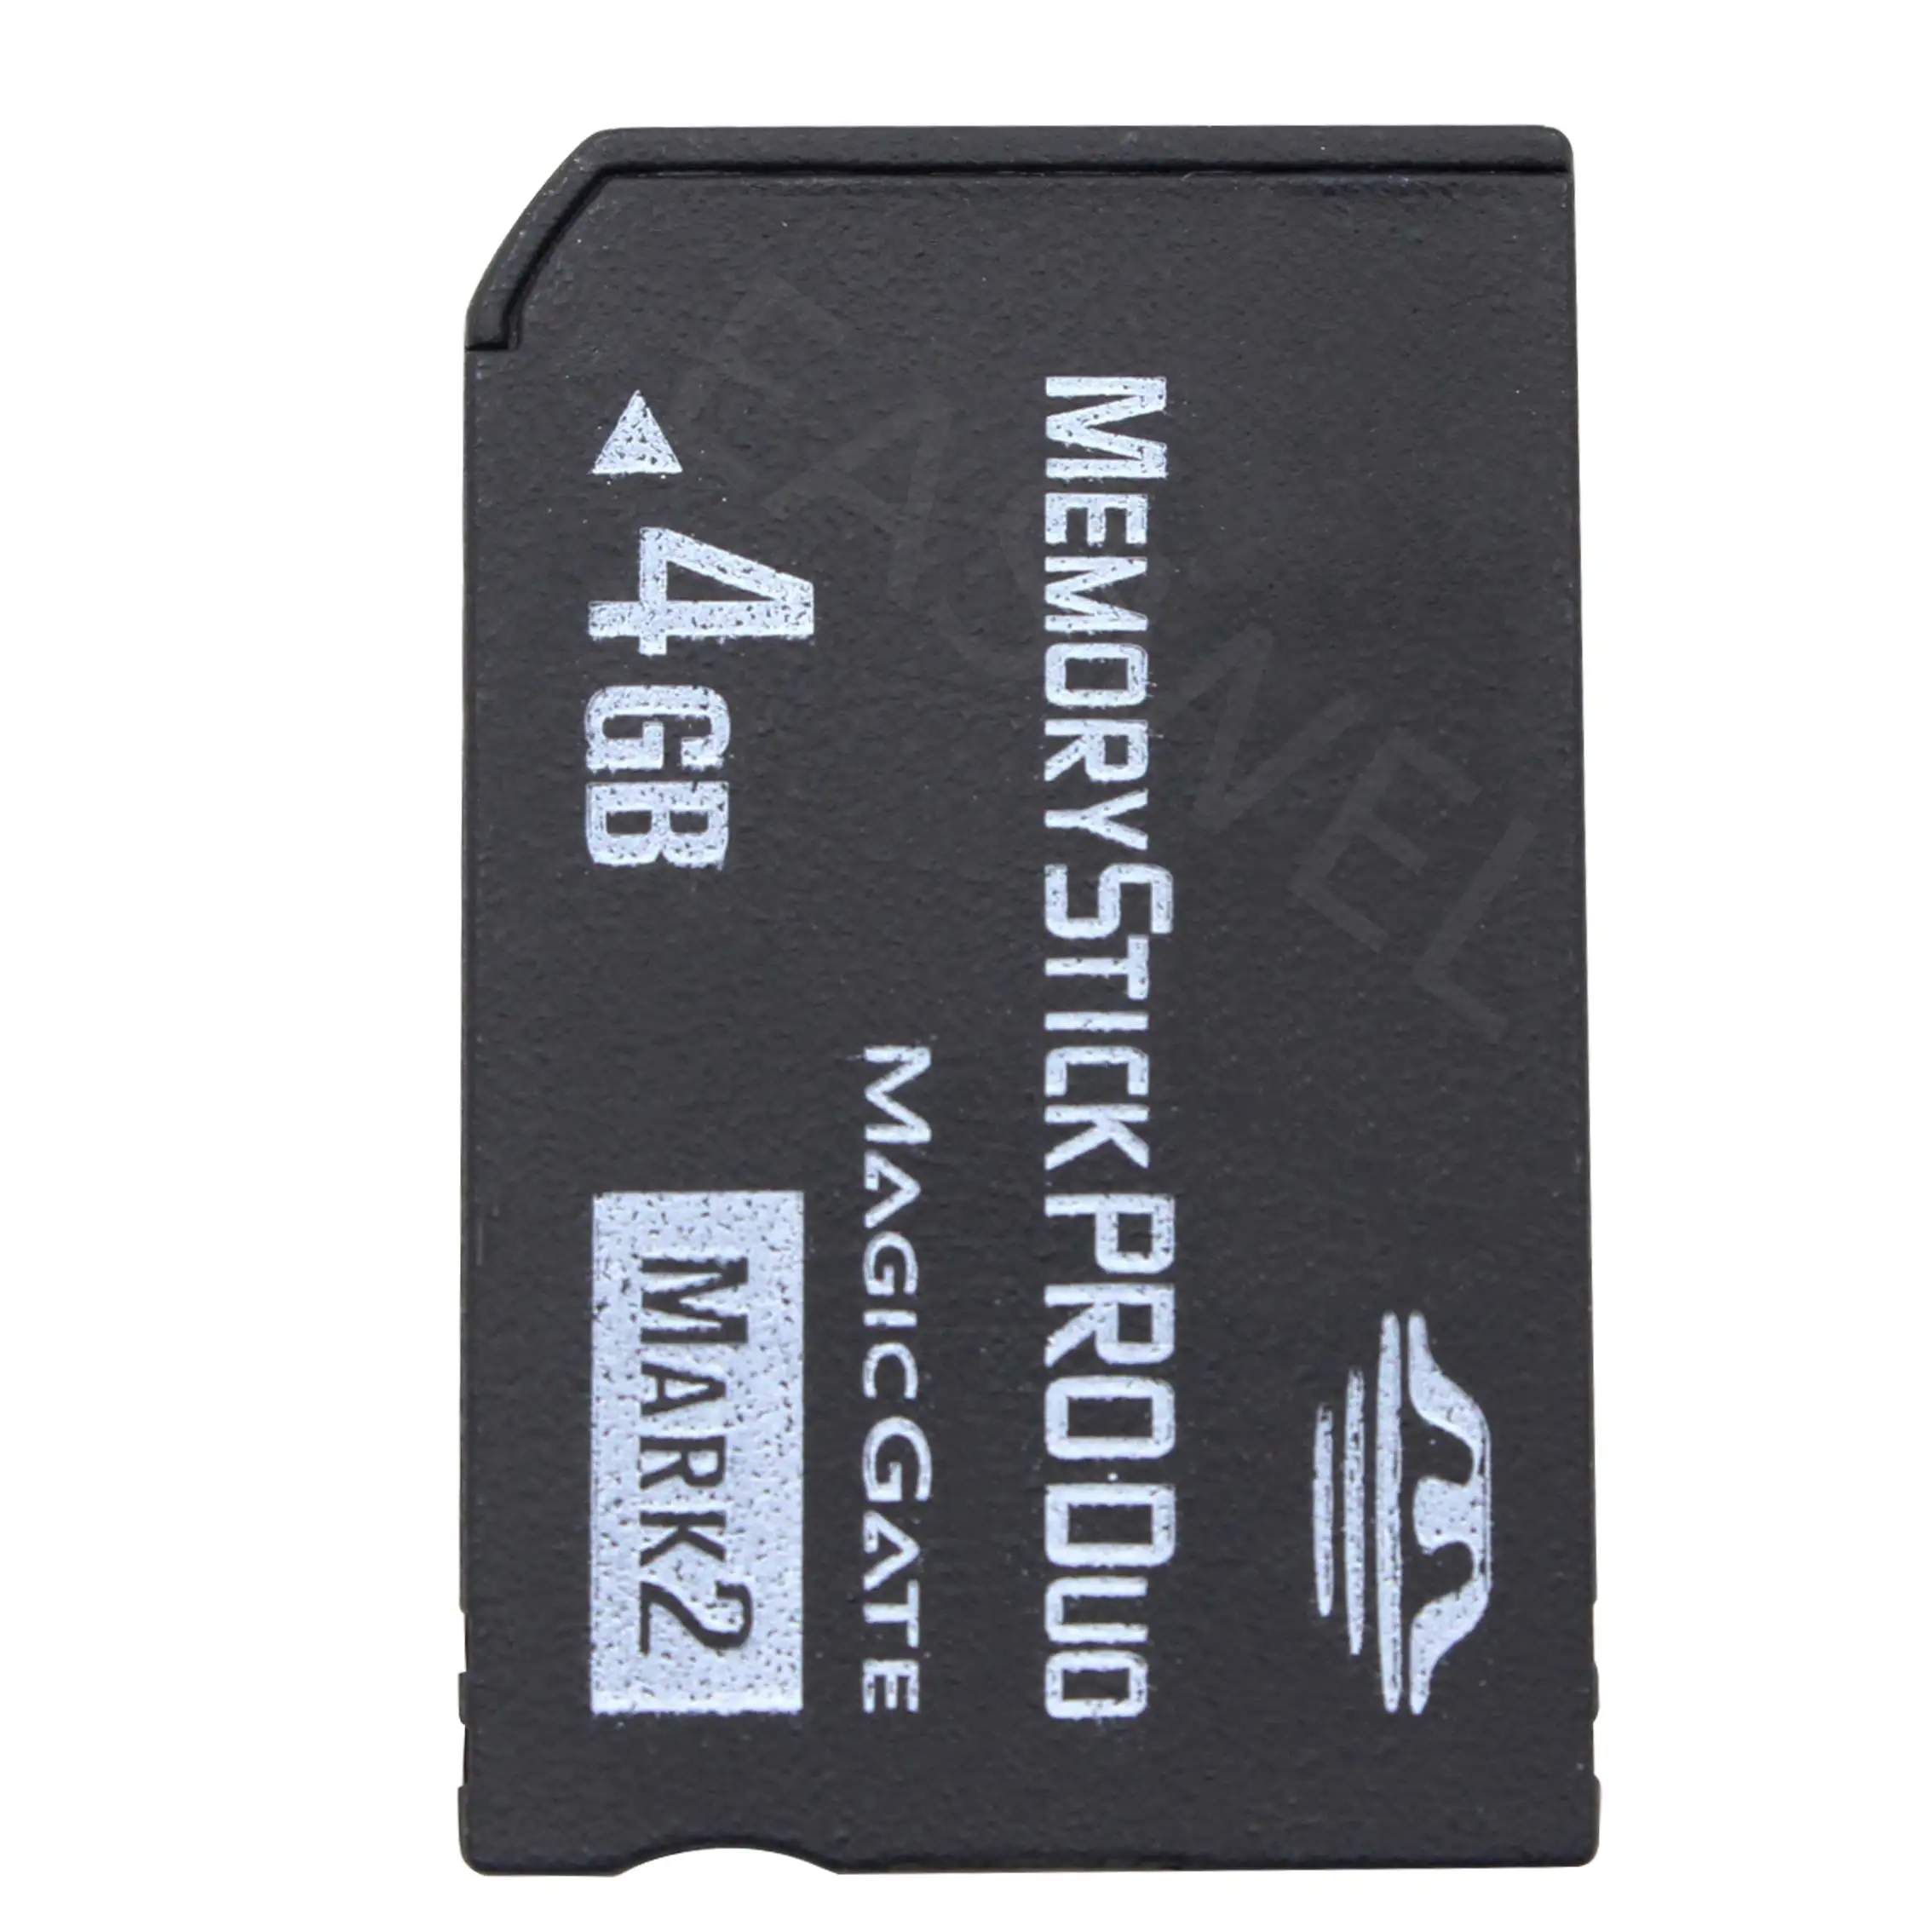 4 GB Memory Stick Pro Speicherkarte für Sony Cyber Shot DSC-P200 